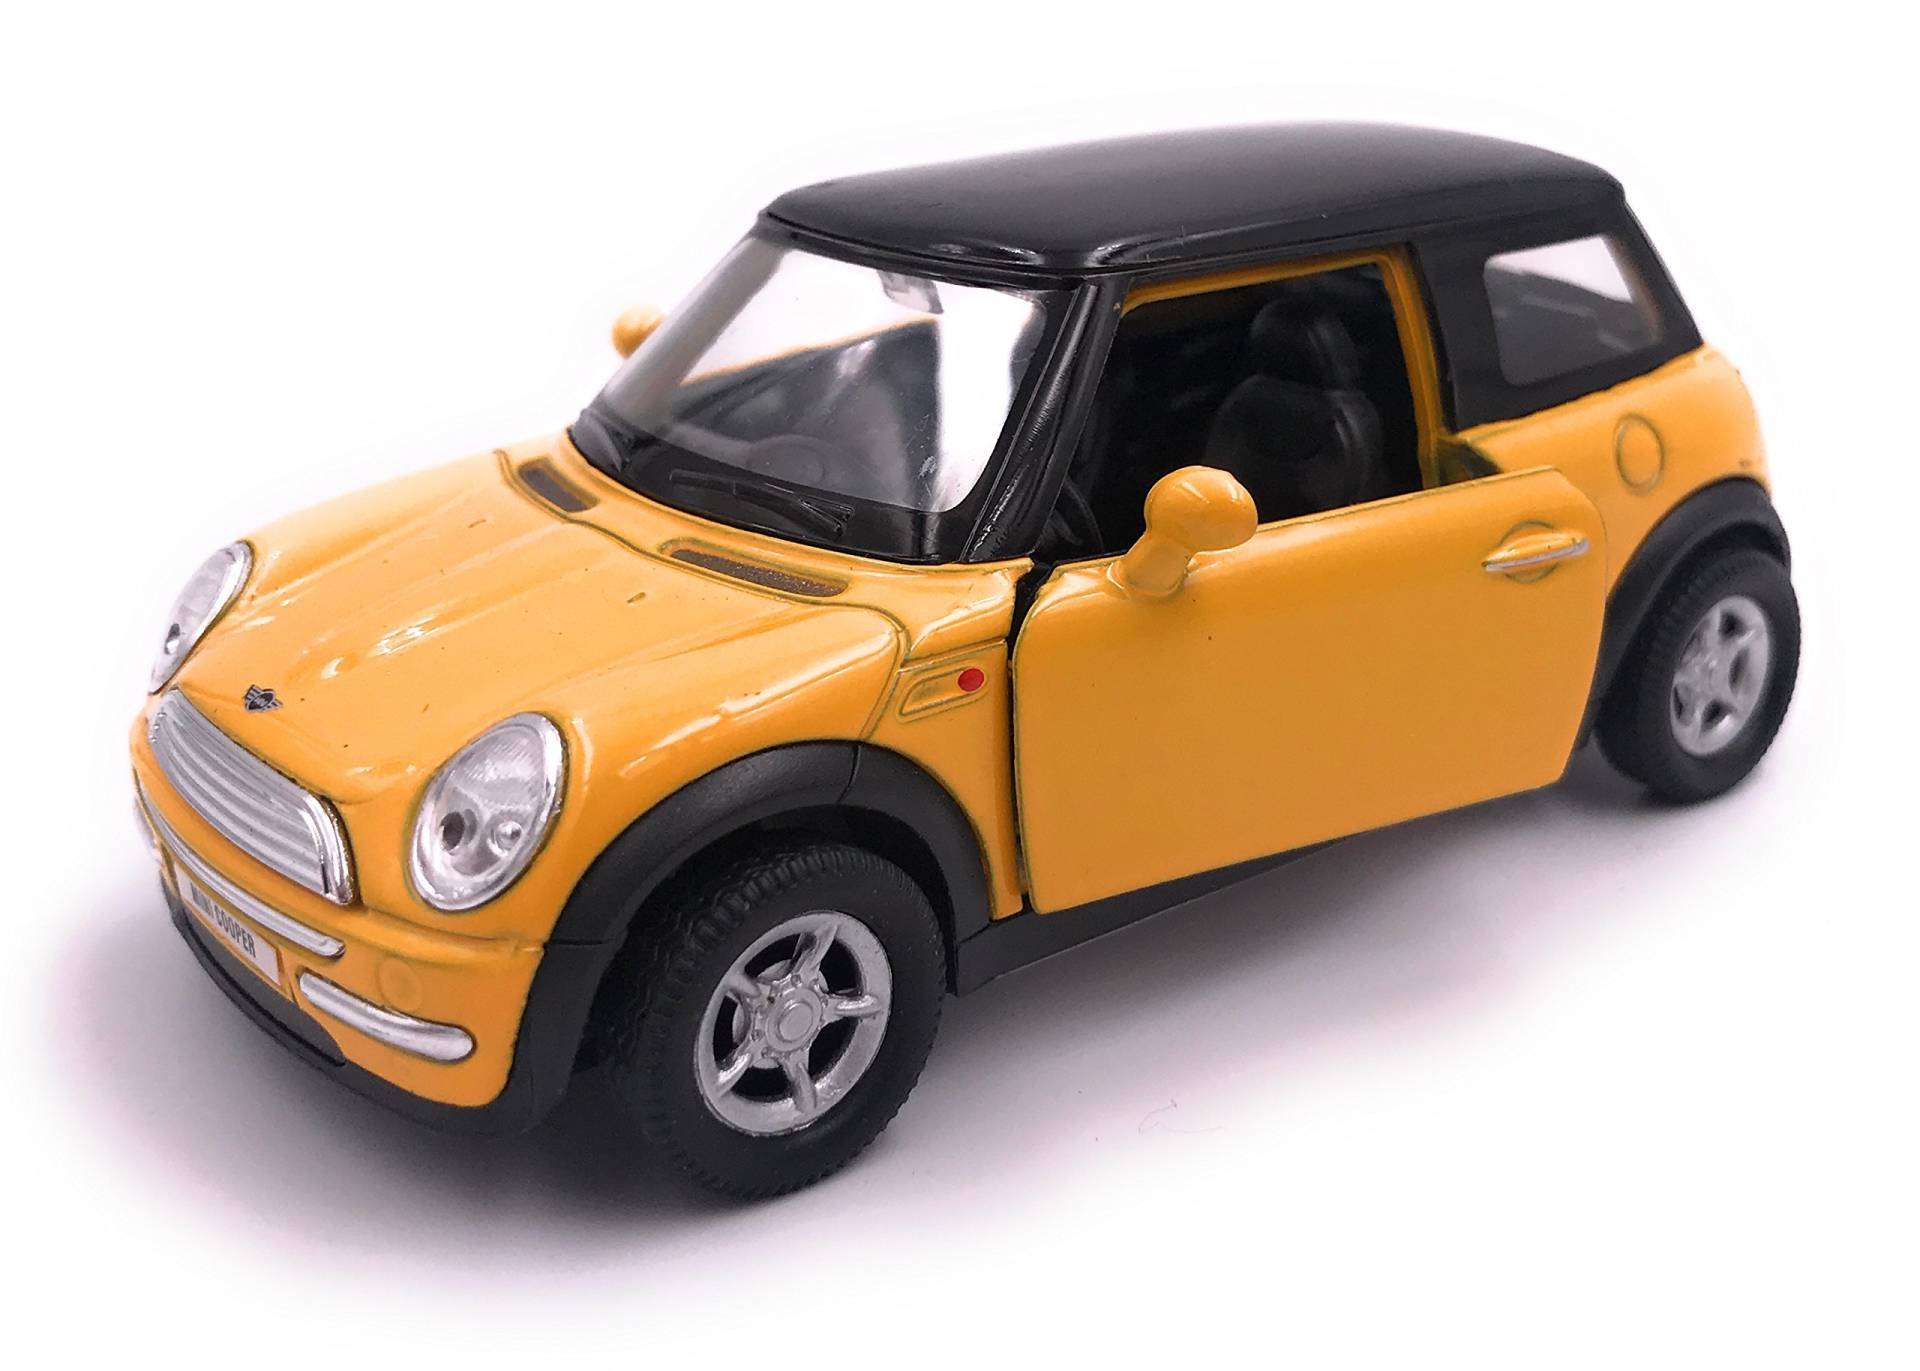 H-Customs Mini Modellauto Miniatur Auto Lizenzprodukt 1:34-1:39 Rot von Welly